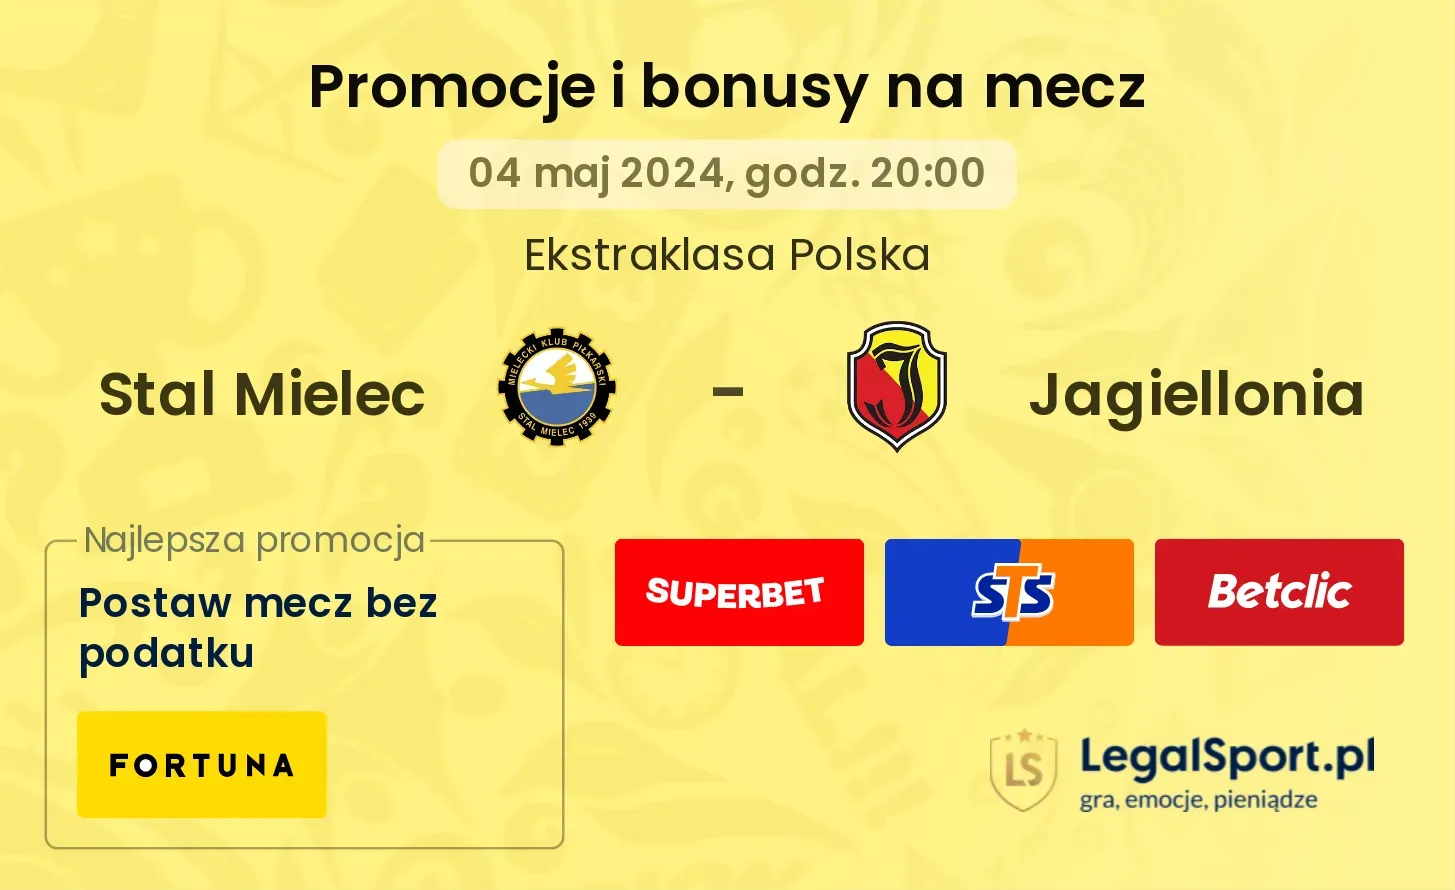 Stal Mielec - Jagiellonia promocje bonusy na mecz